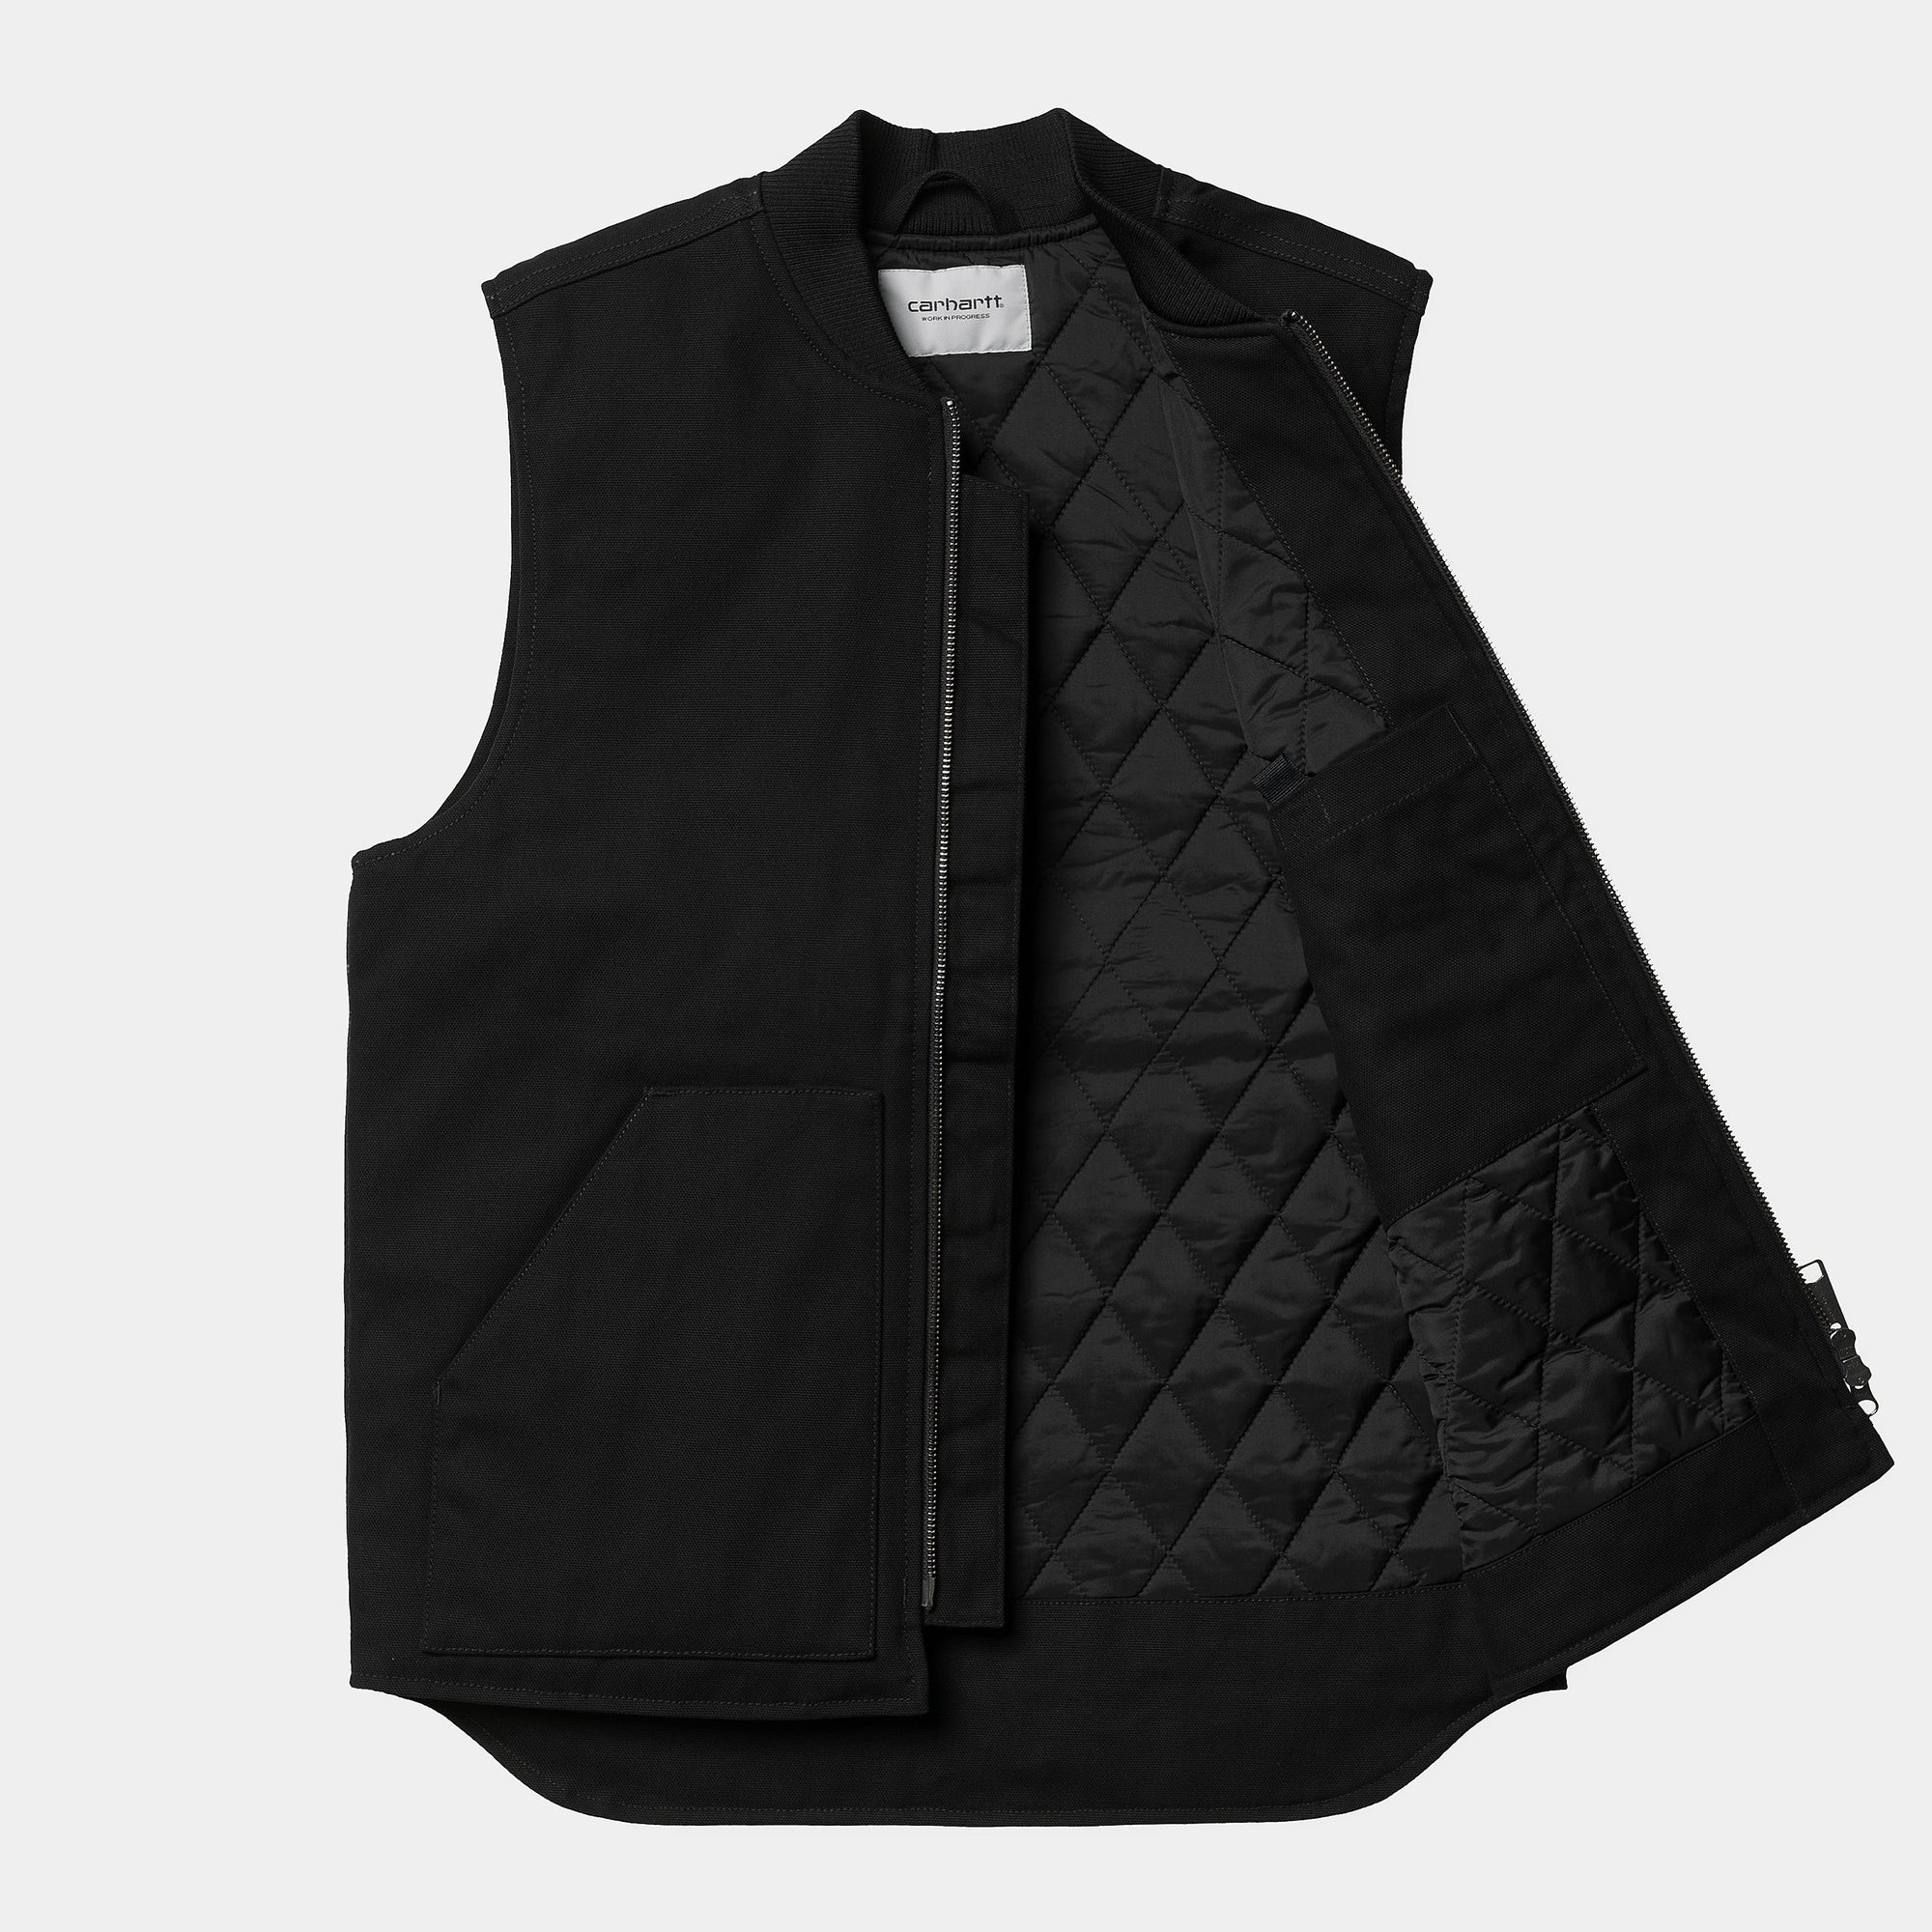 Carhartt WIP - Vest Jacket - Black (Rigid)